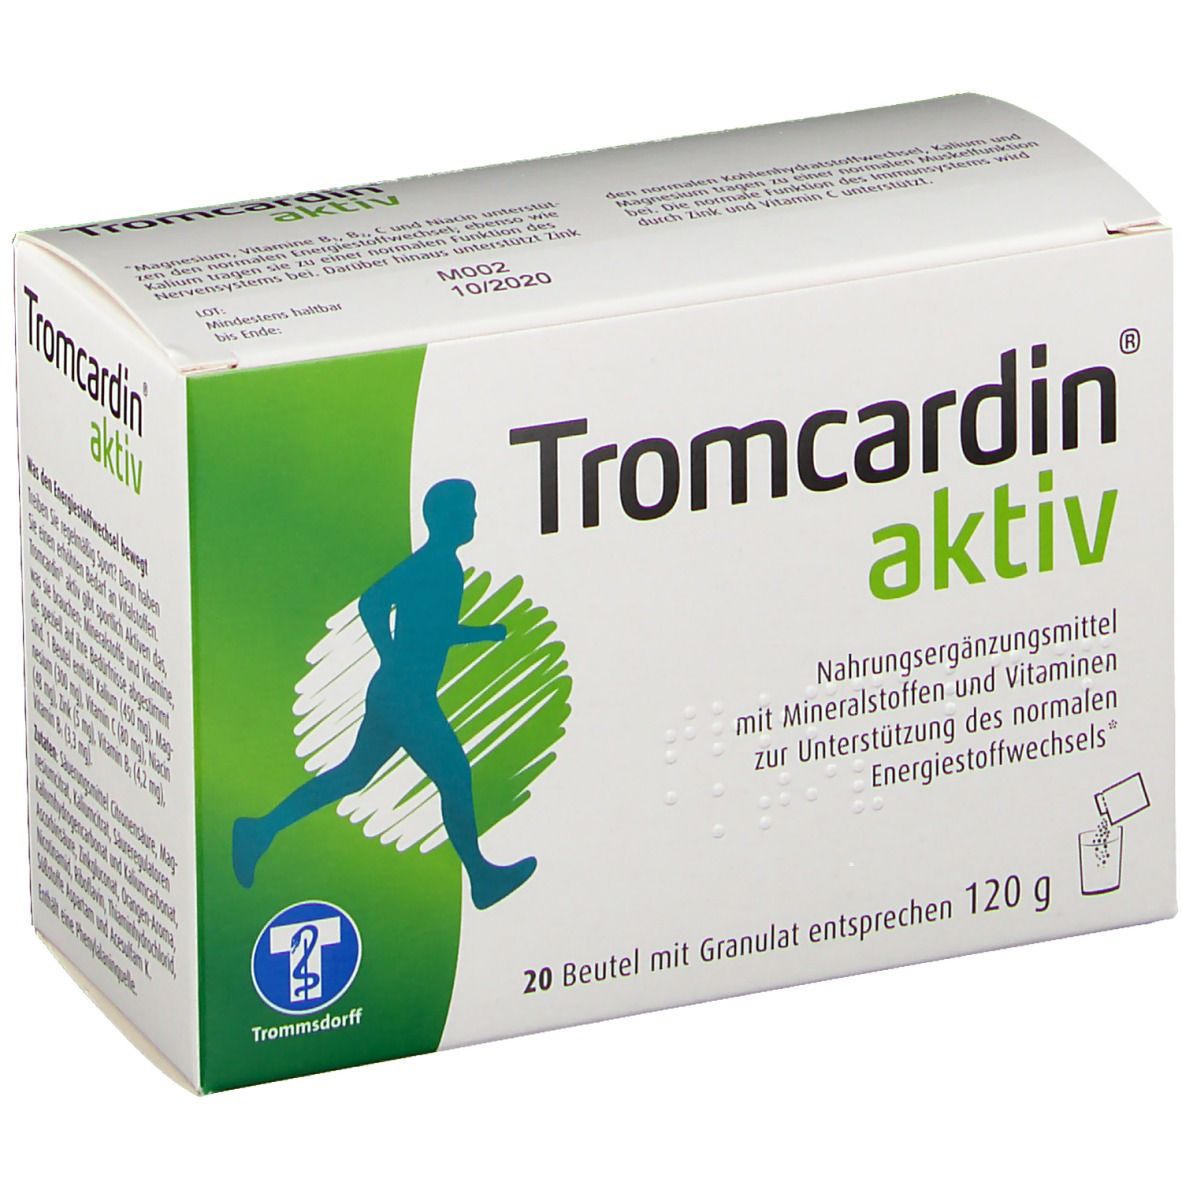 Image of Tromcardin® aktiv